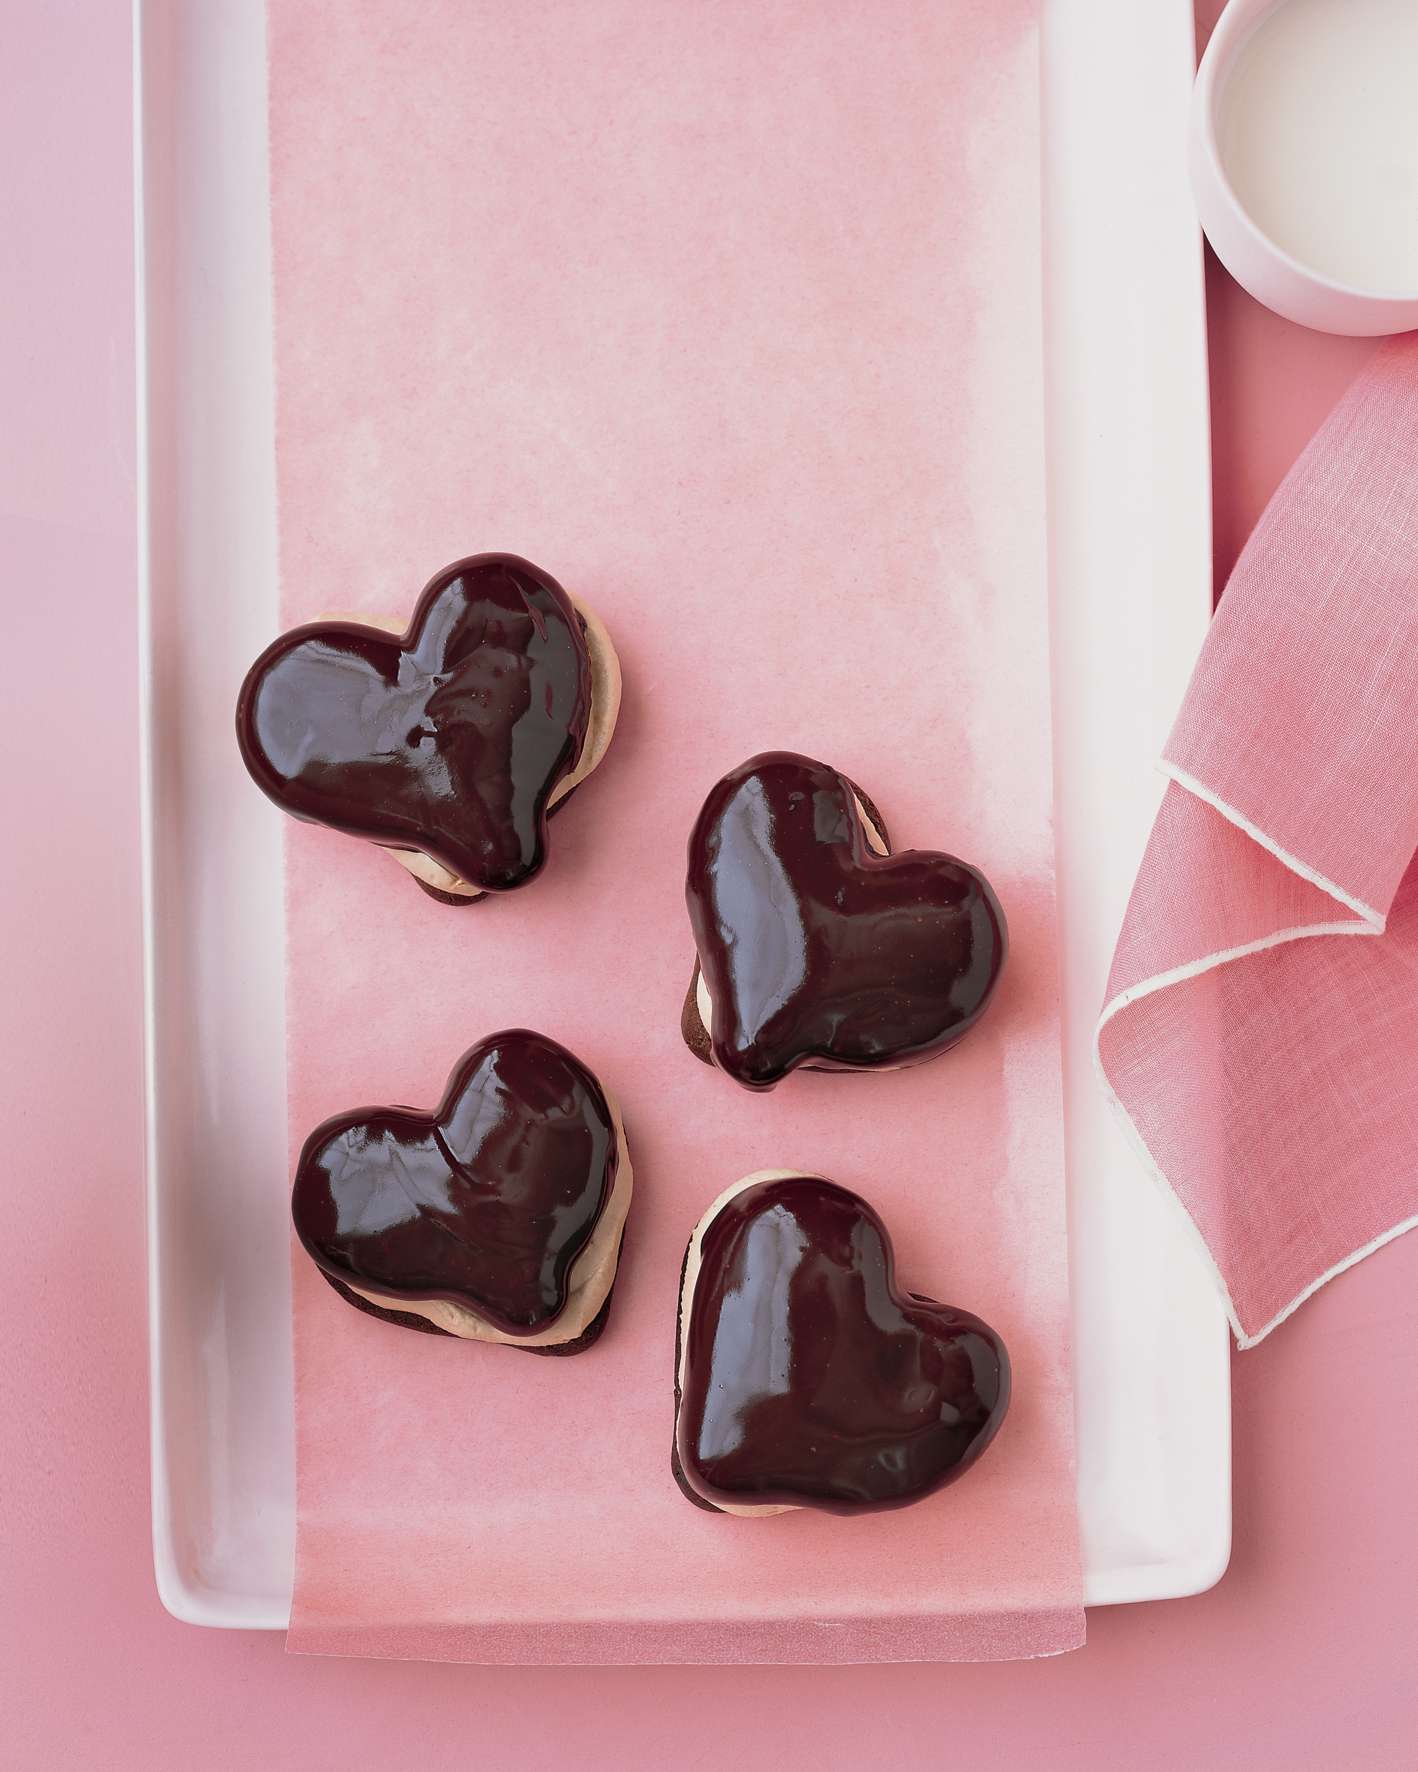 Chocolate Eclair Hearts